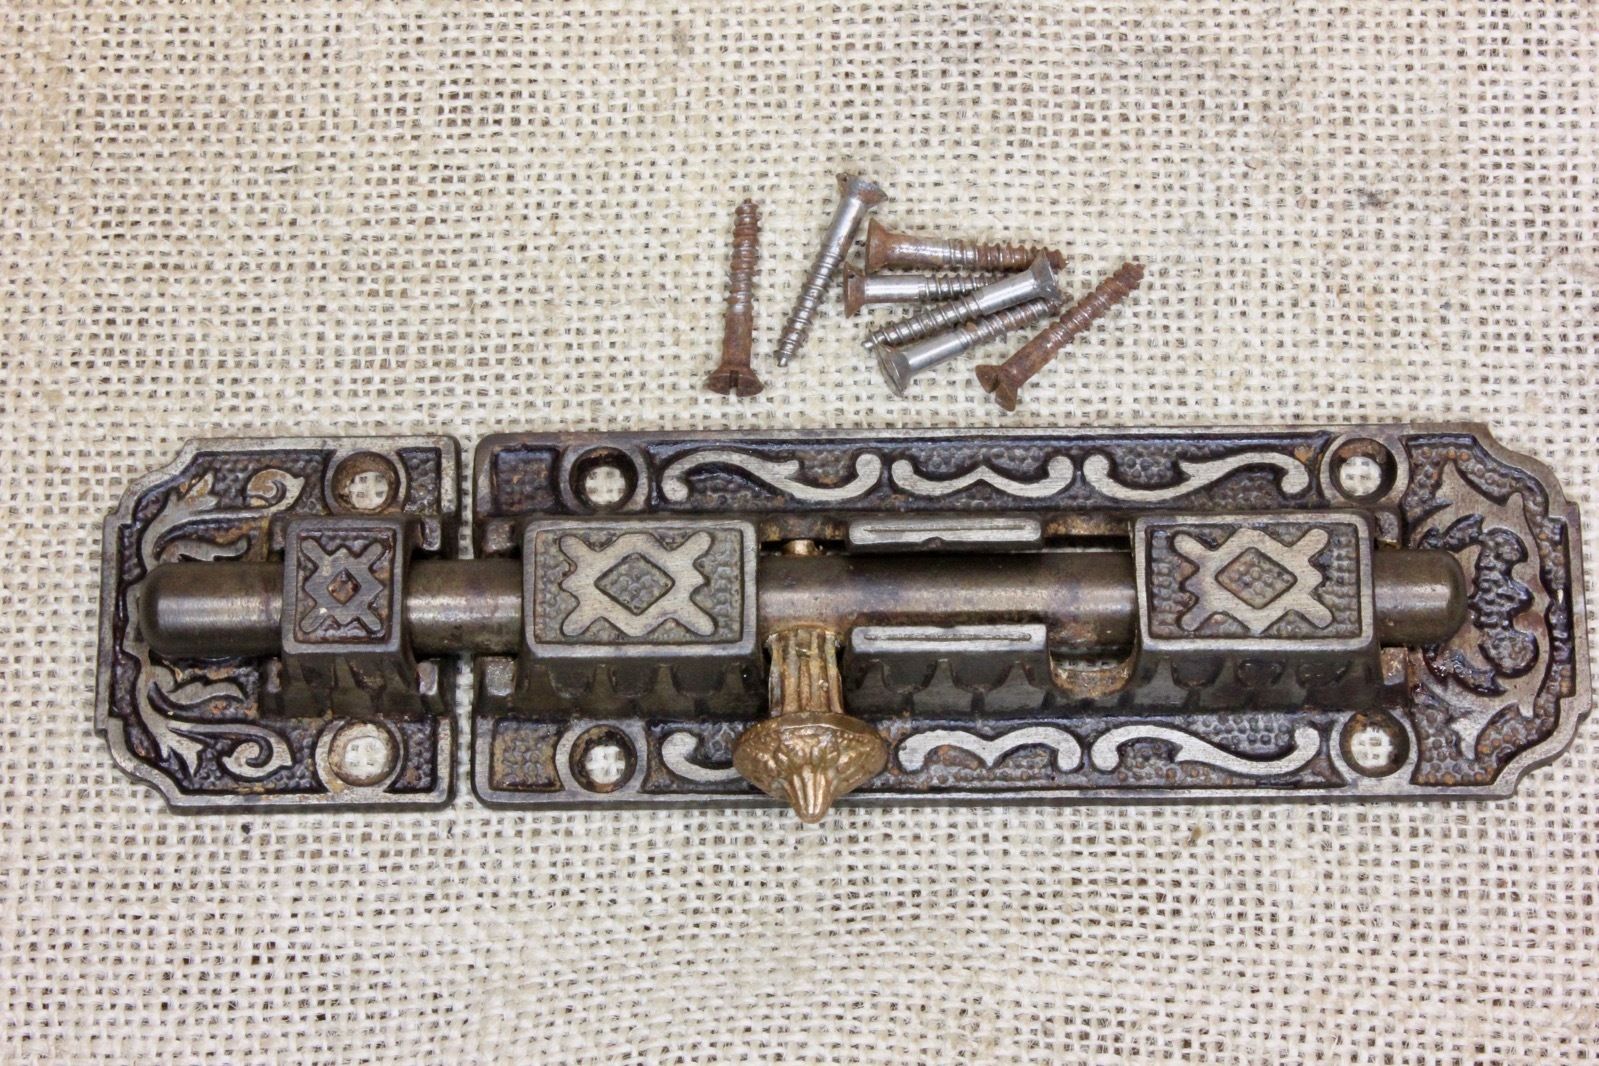 Door slide bolt security latch lock brass knob old vintage cast iron 6 1/8"